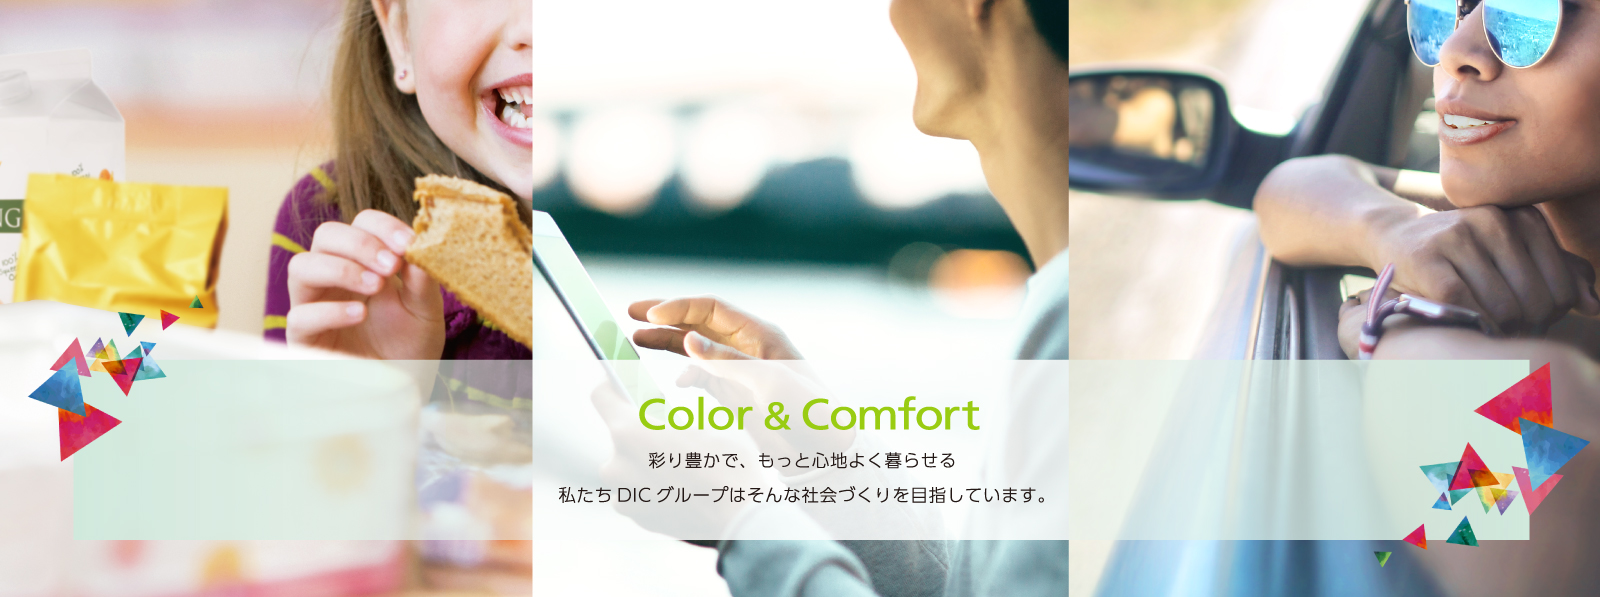 Color&Comform